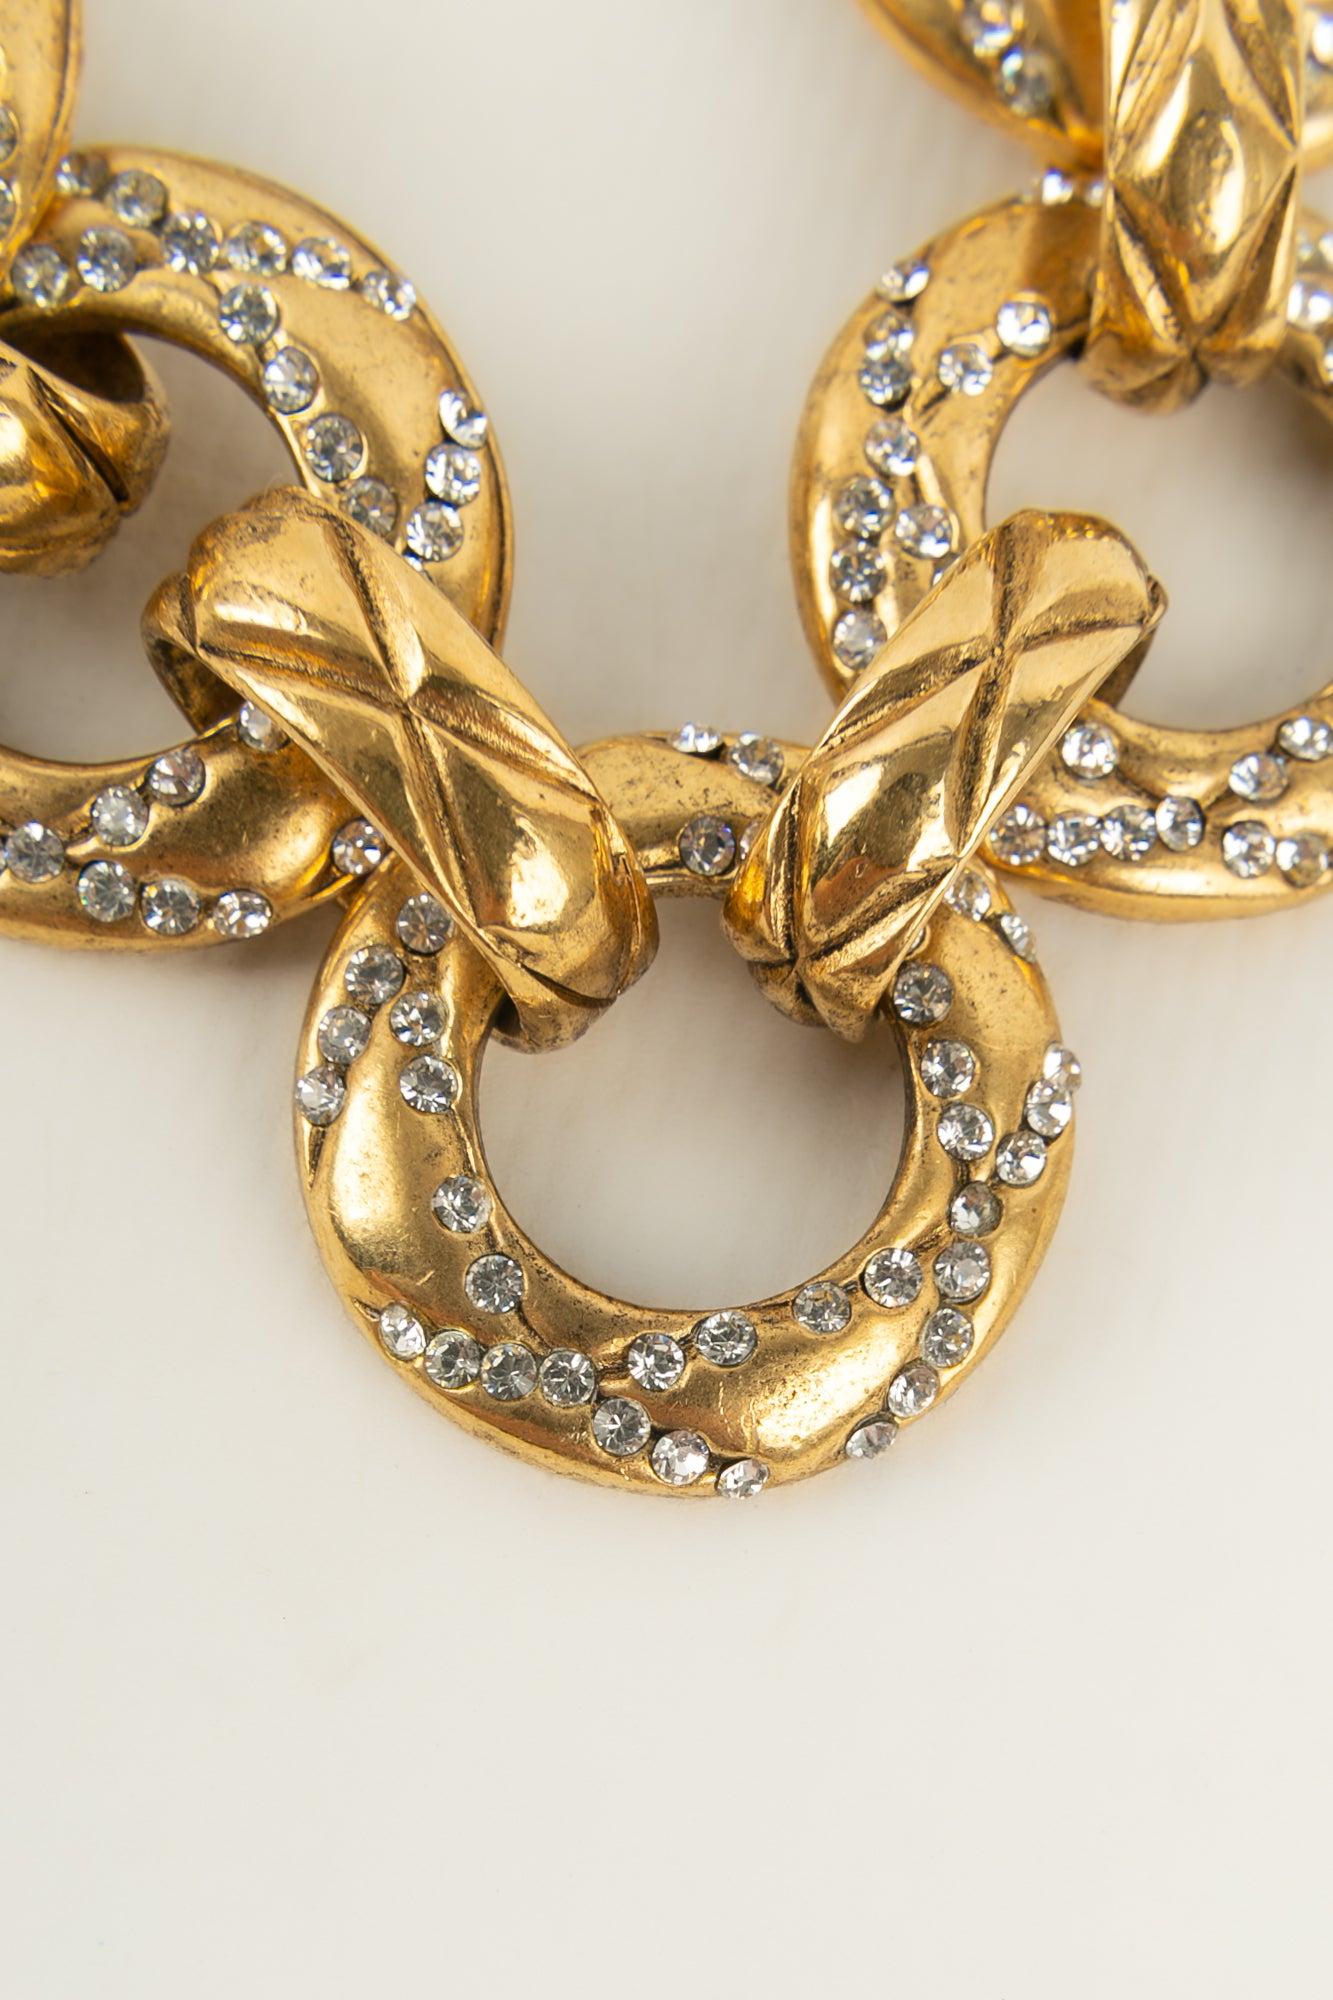 Women's Chanel Golden Bracelet in Golden Metal with Swarovski Rhinestones, 2003 For Sale